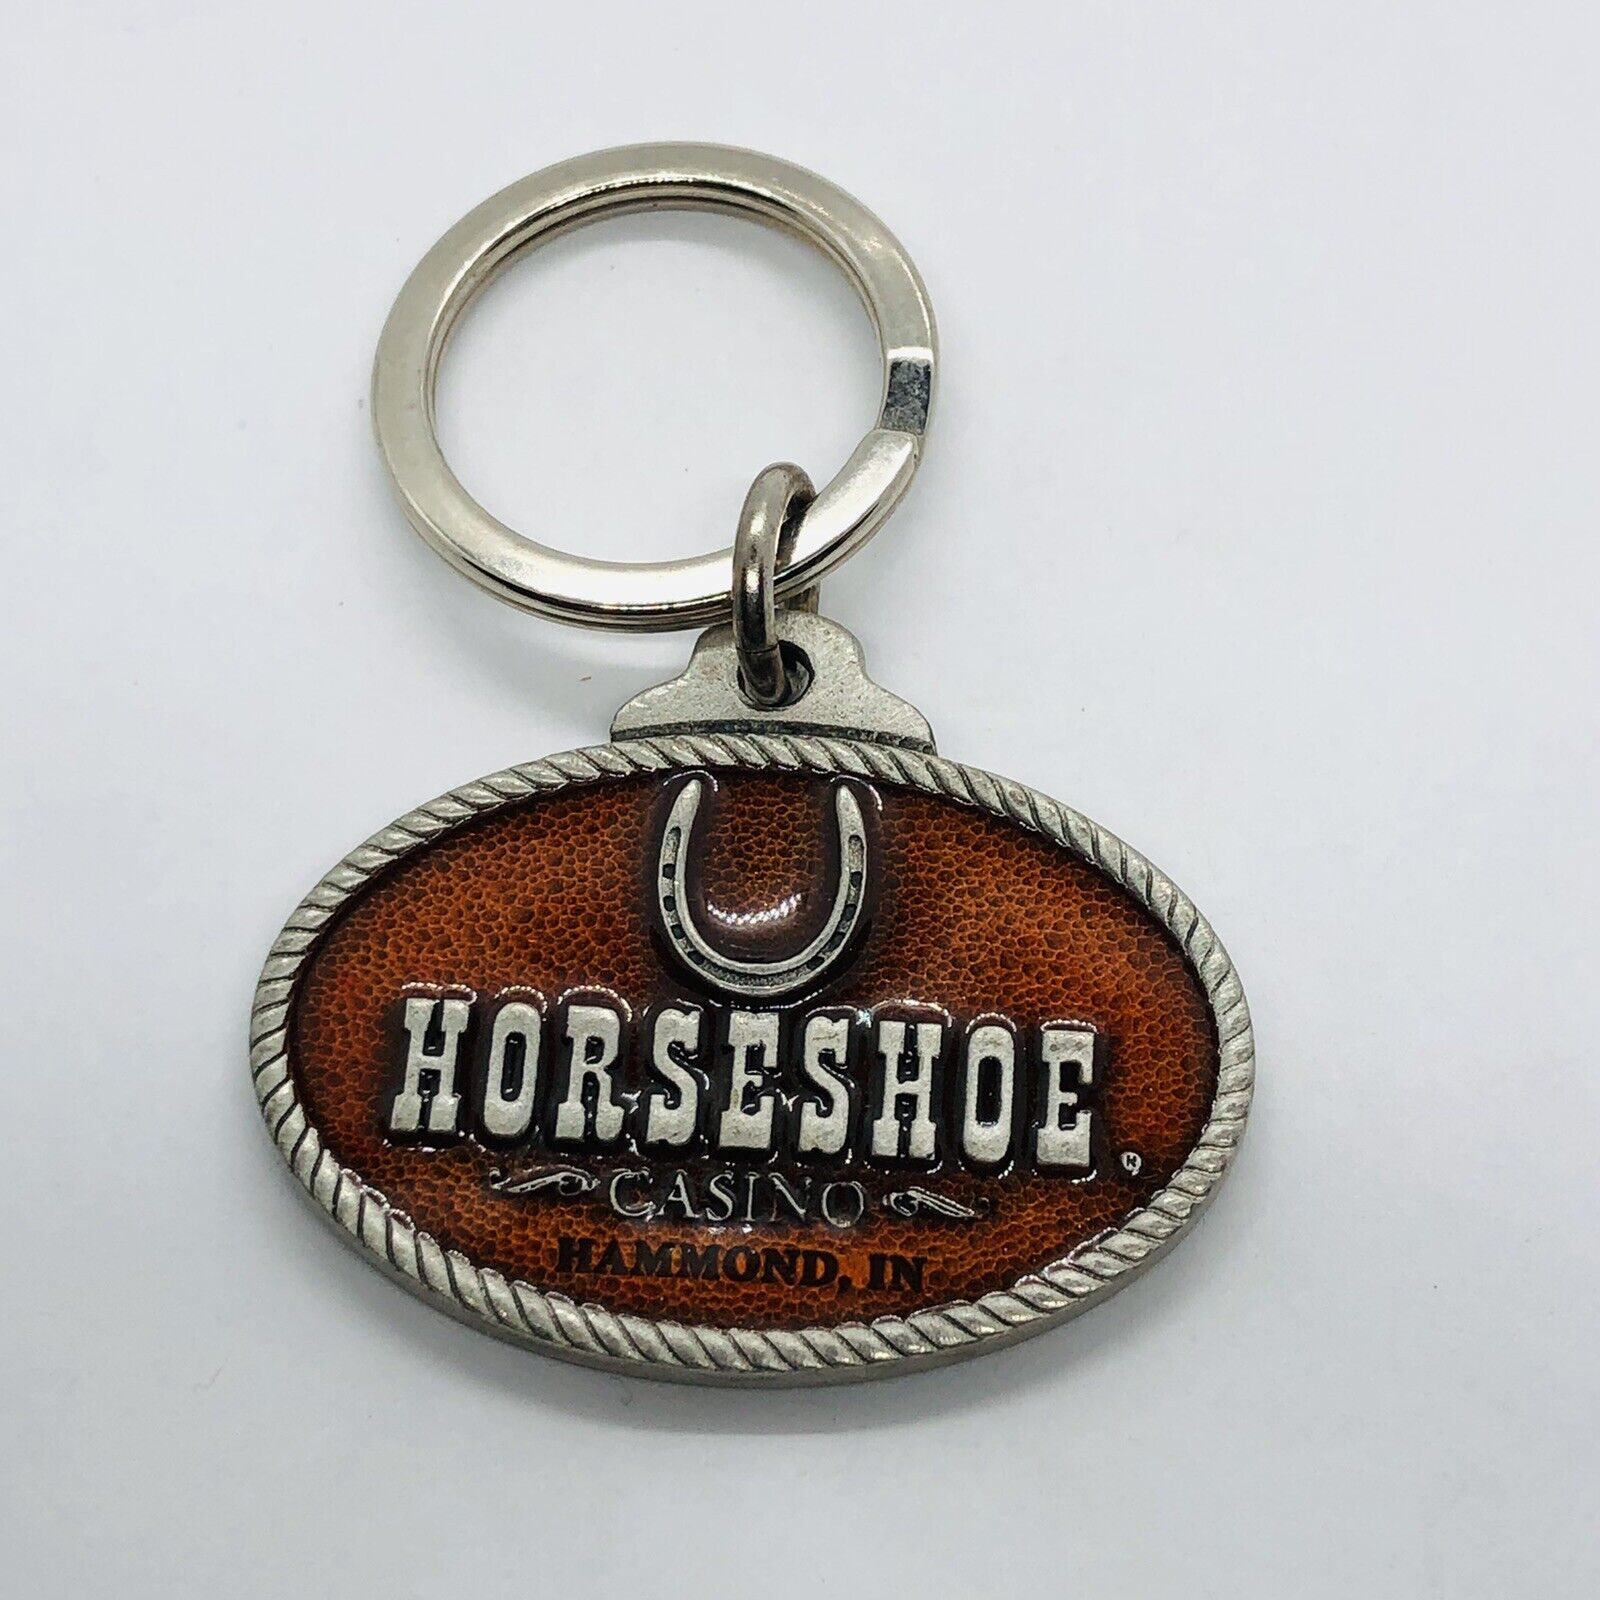 Horseshoe Casino Souvenir Pewter Keychain Key Ring - Hammond IN